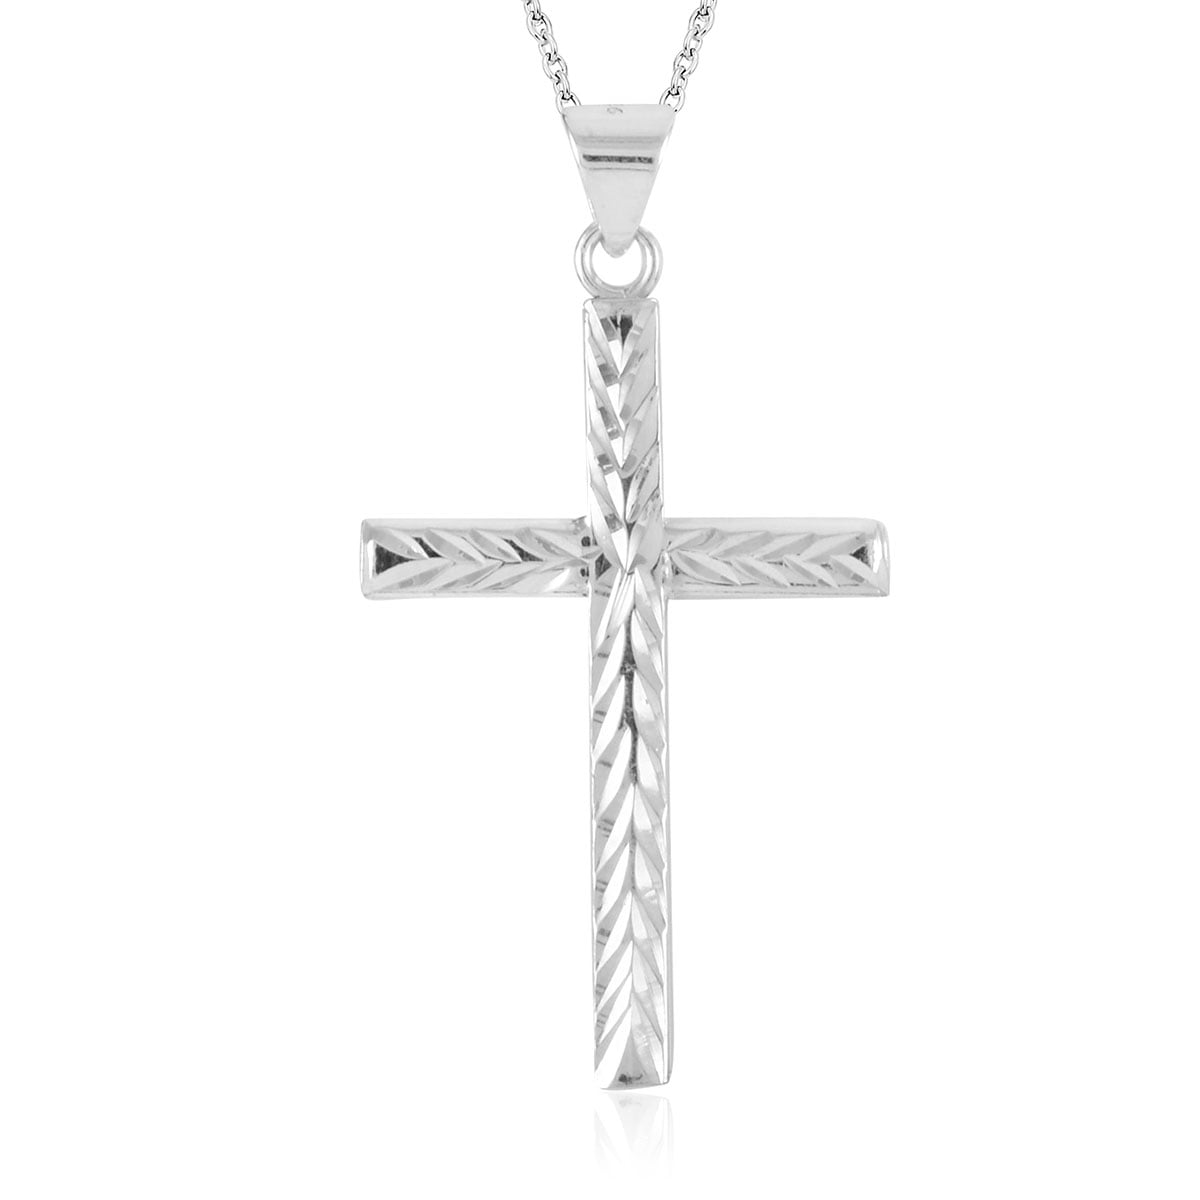 Shop LC Delivering Joy Hypoallergenic Cross Pendant Necklace 24 for Women